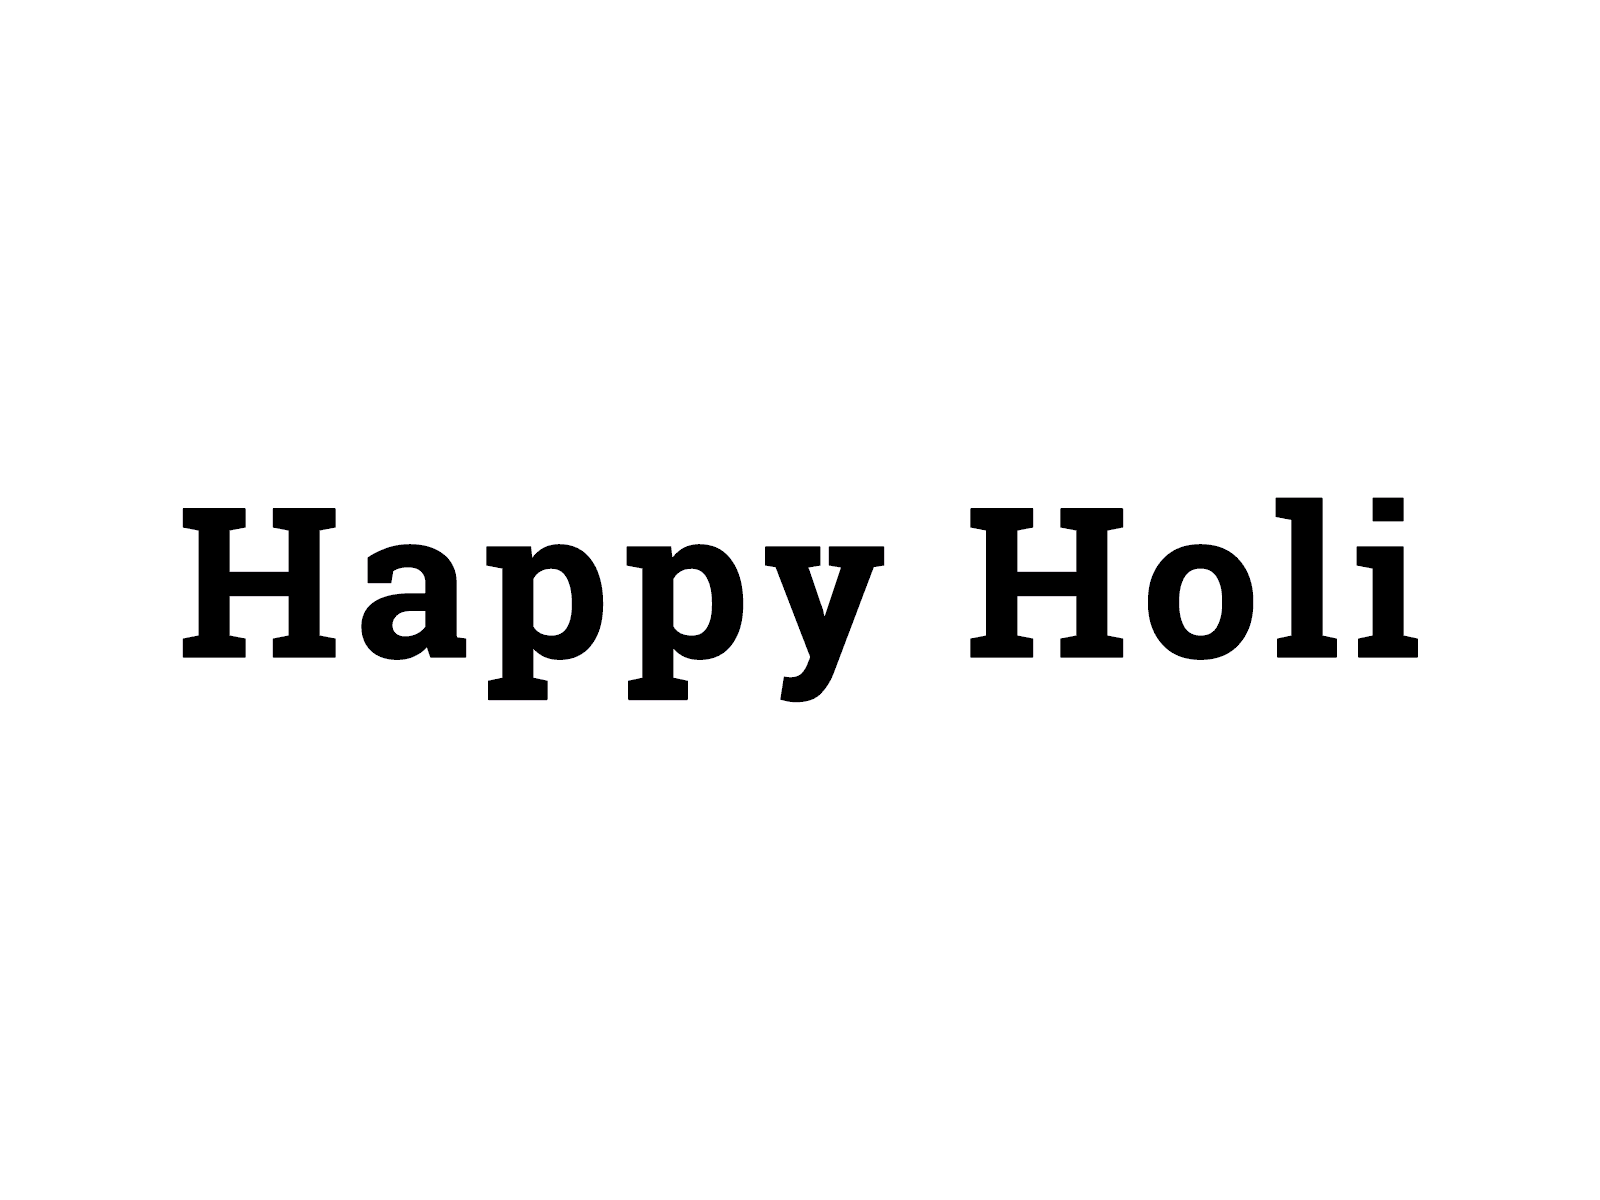 Happy Holi! animation